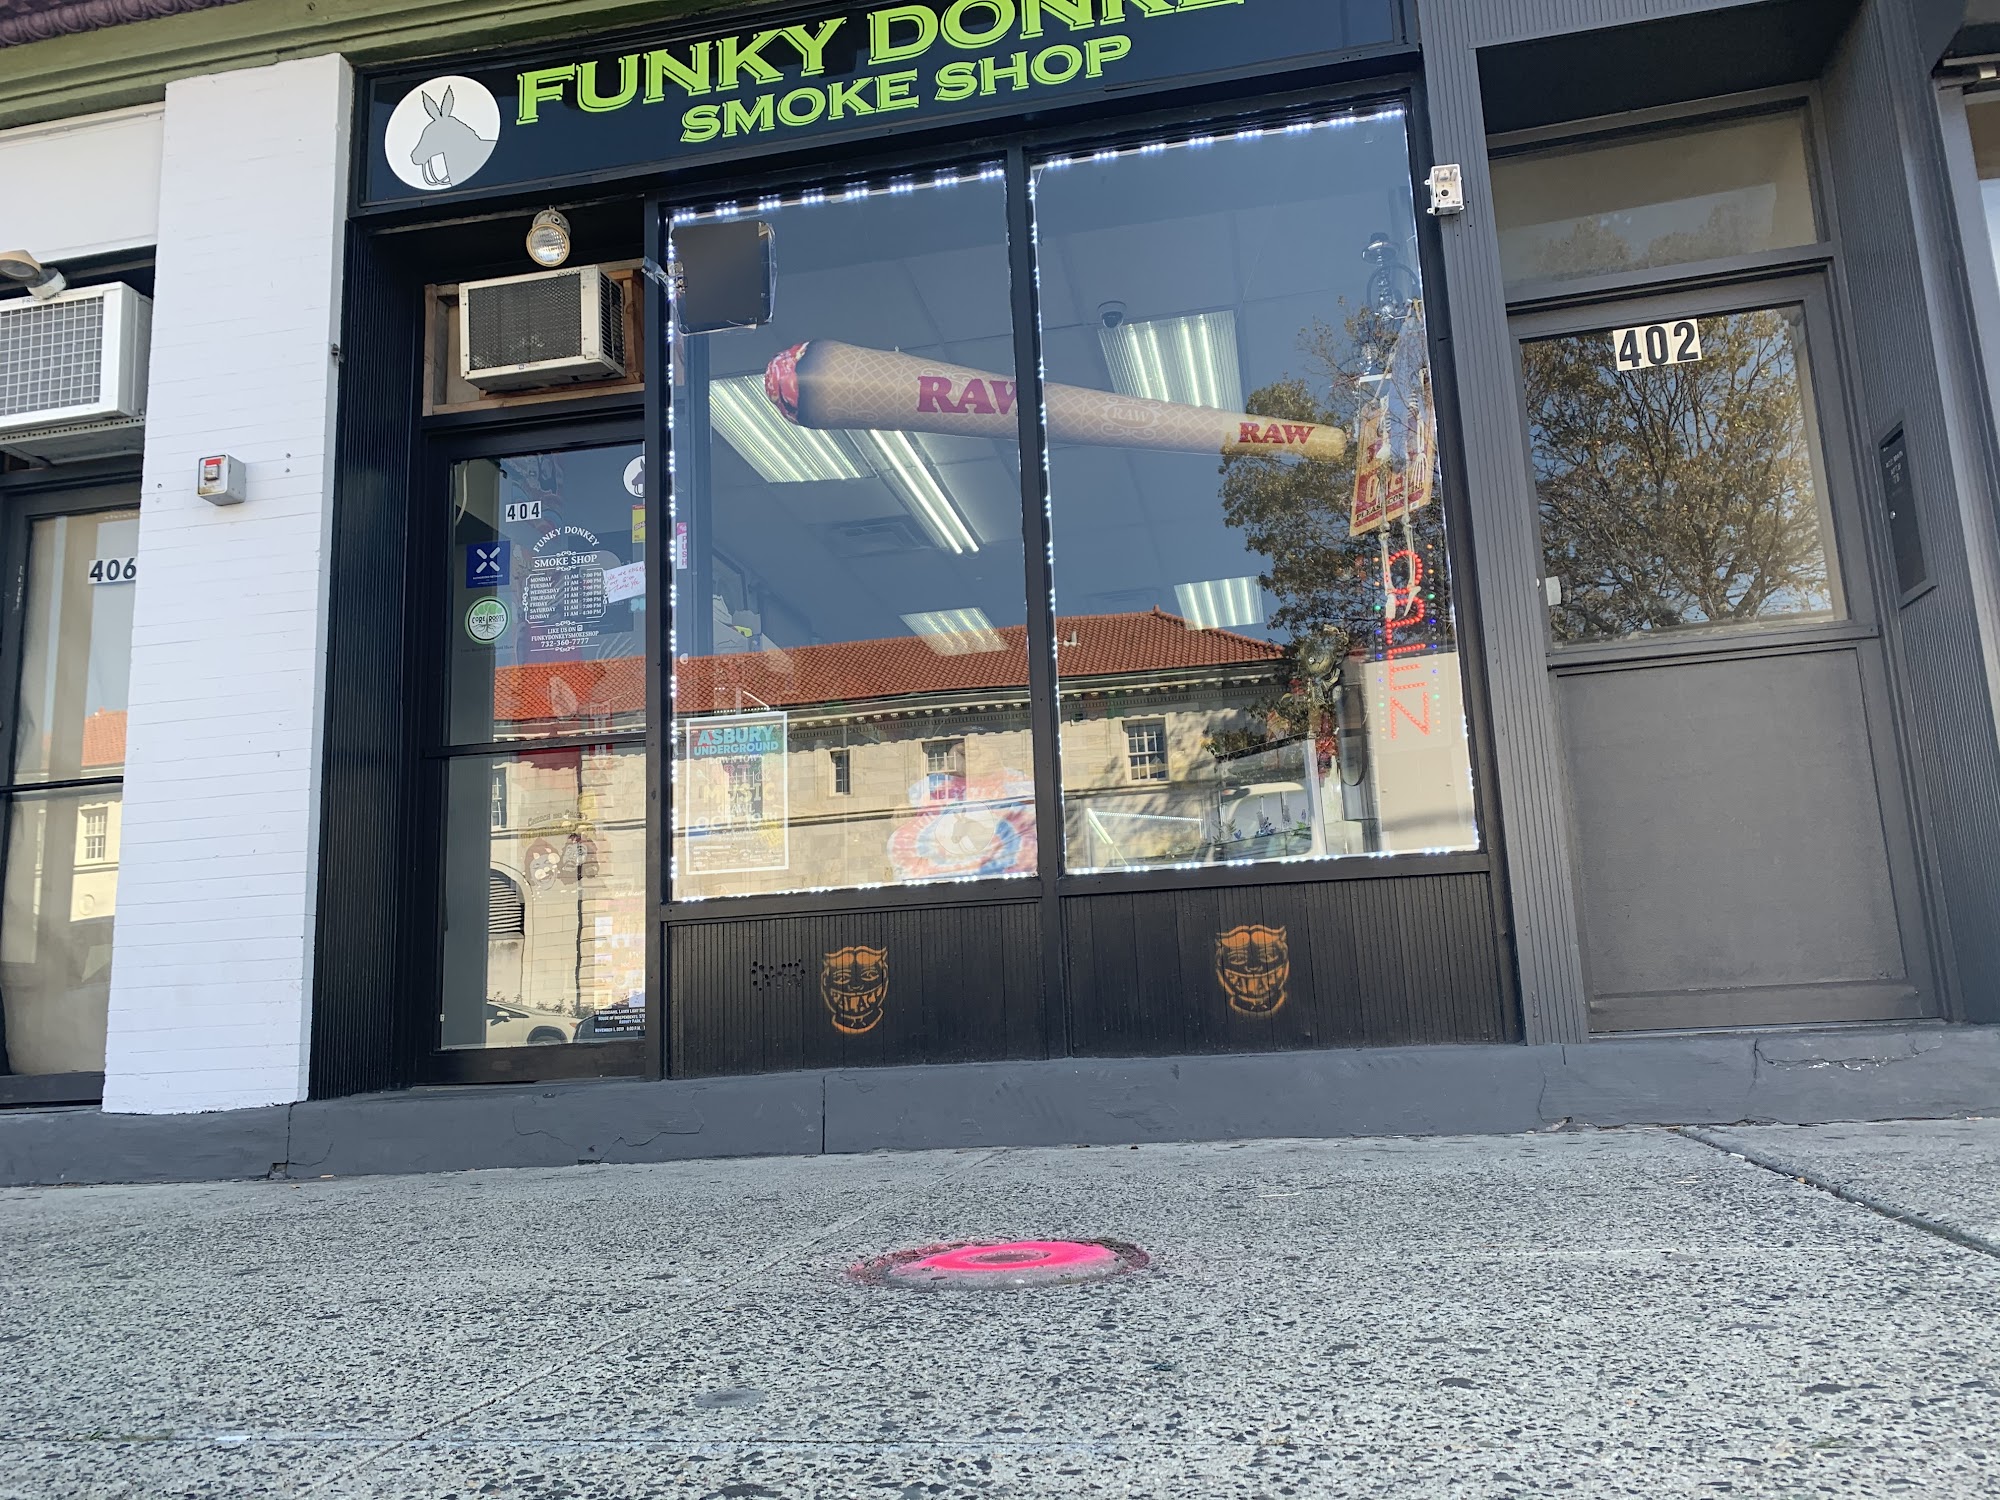 Funky Donkey Smoke Shop 404 Main St, Asbury Park New Jersey 07712